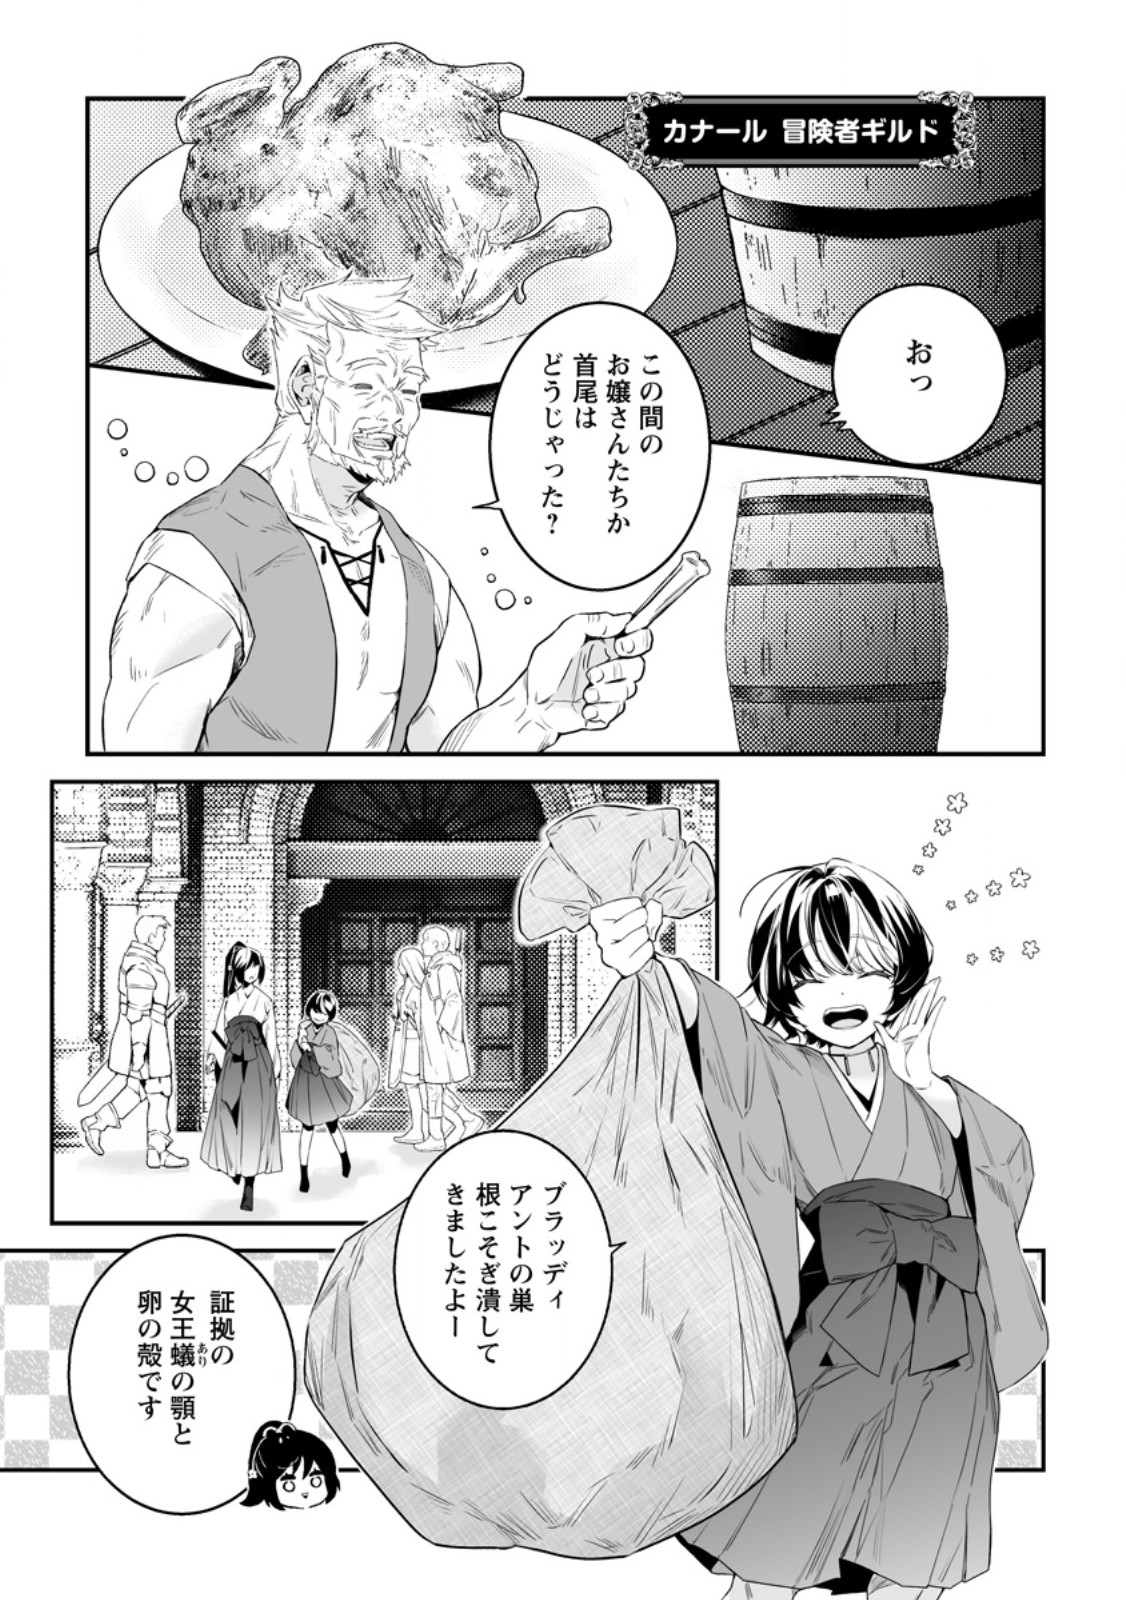 Hakui no Eiyuu - Chapter 34.1 - Page 9